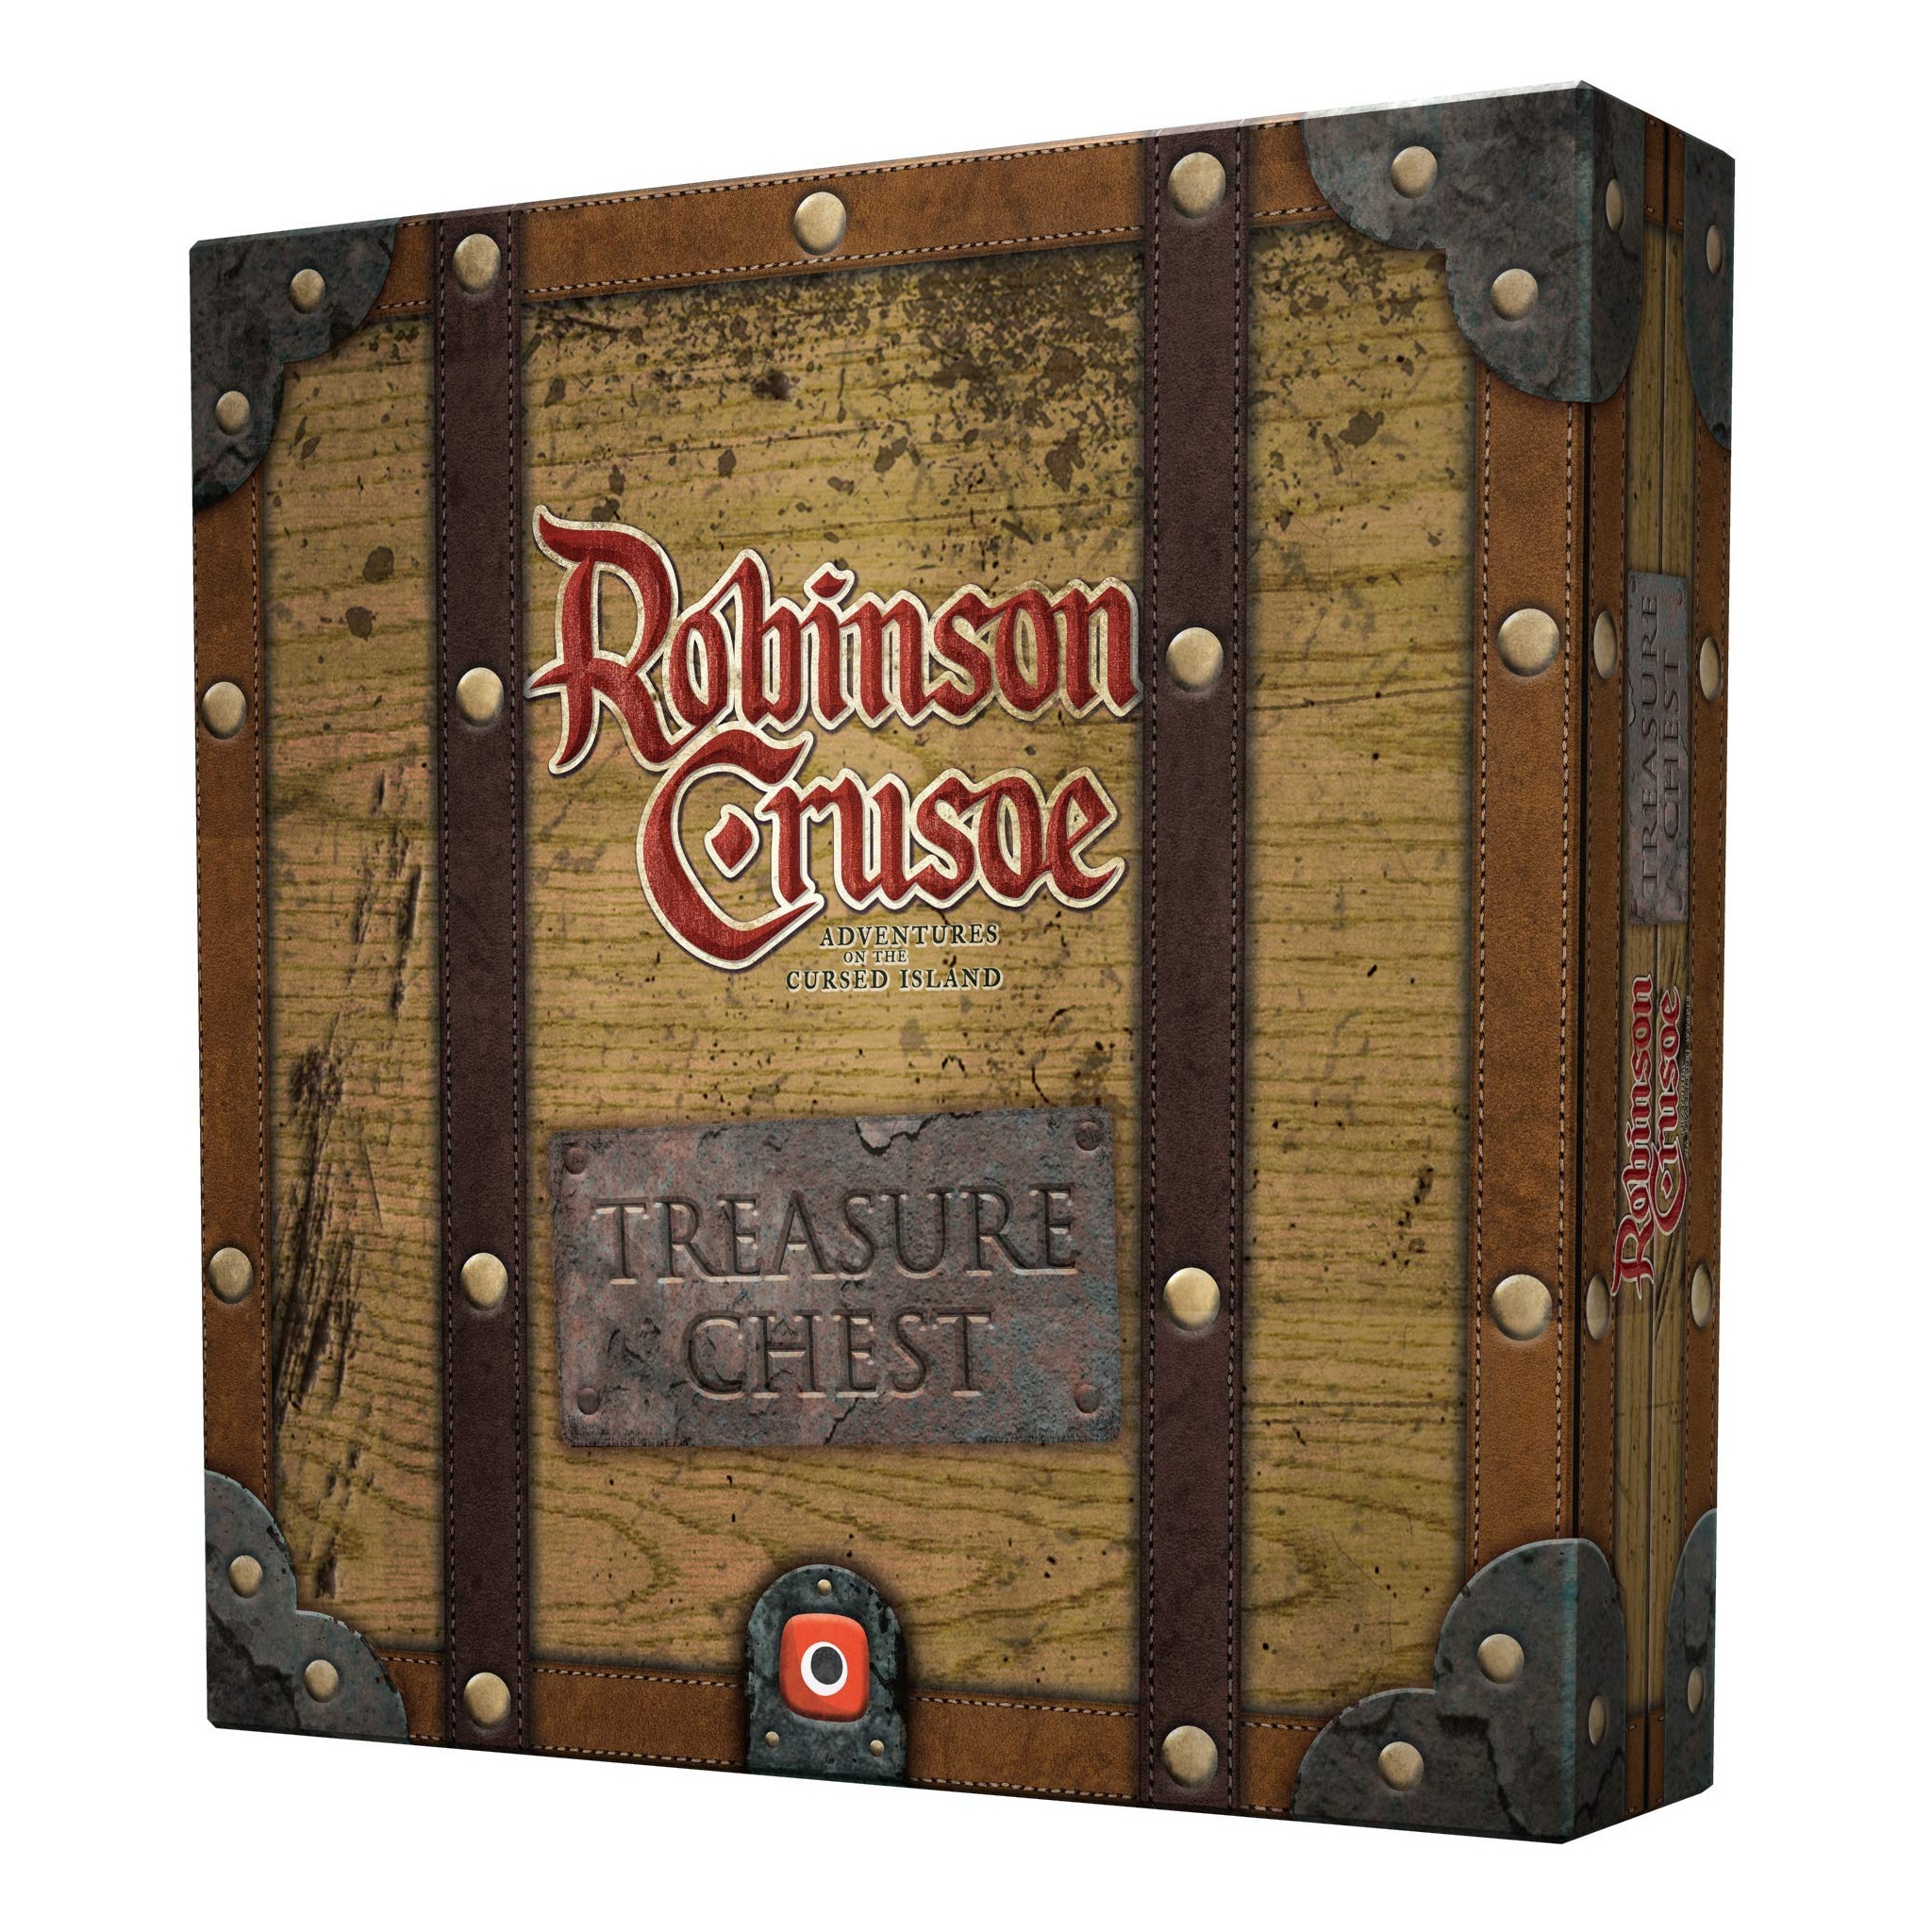 Bild Portal Publishing 394 - Robinson Crusoe: Treasure Chest